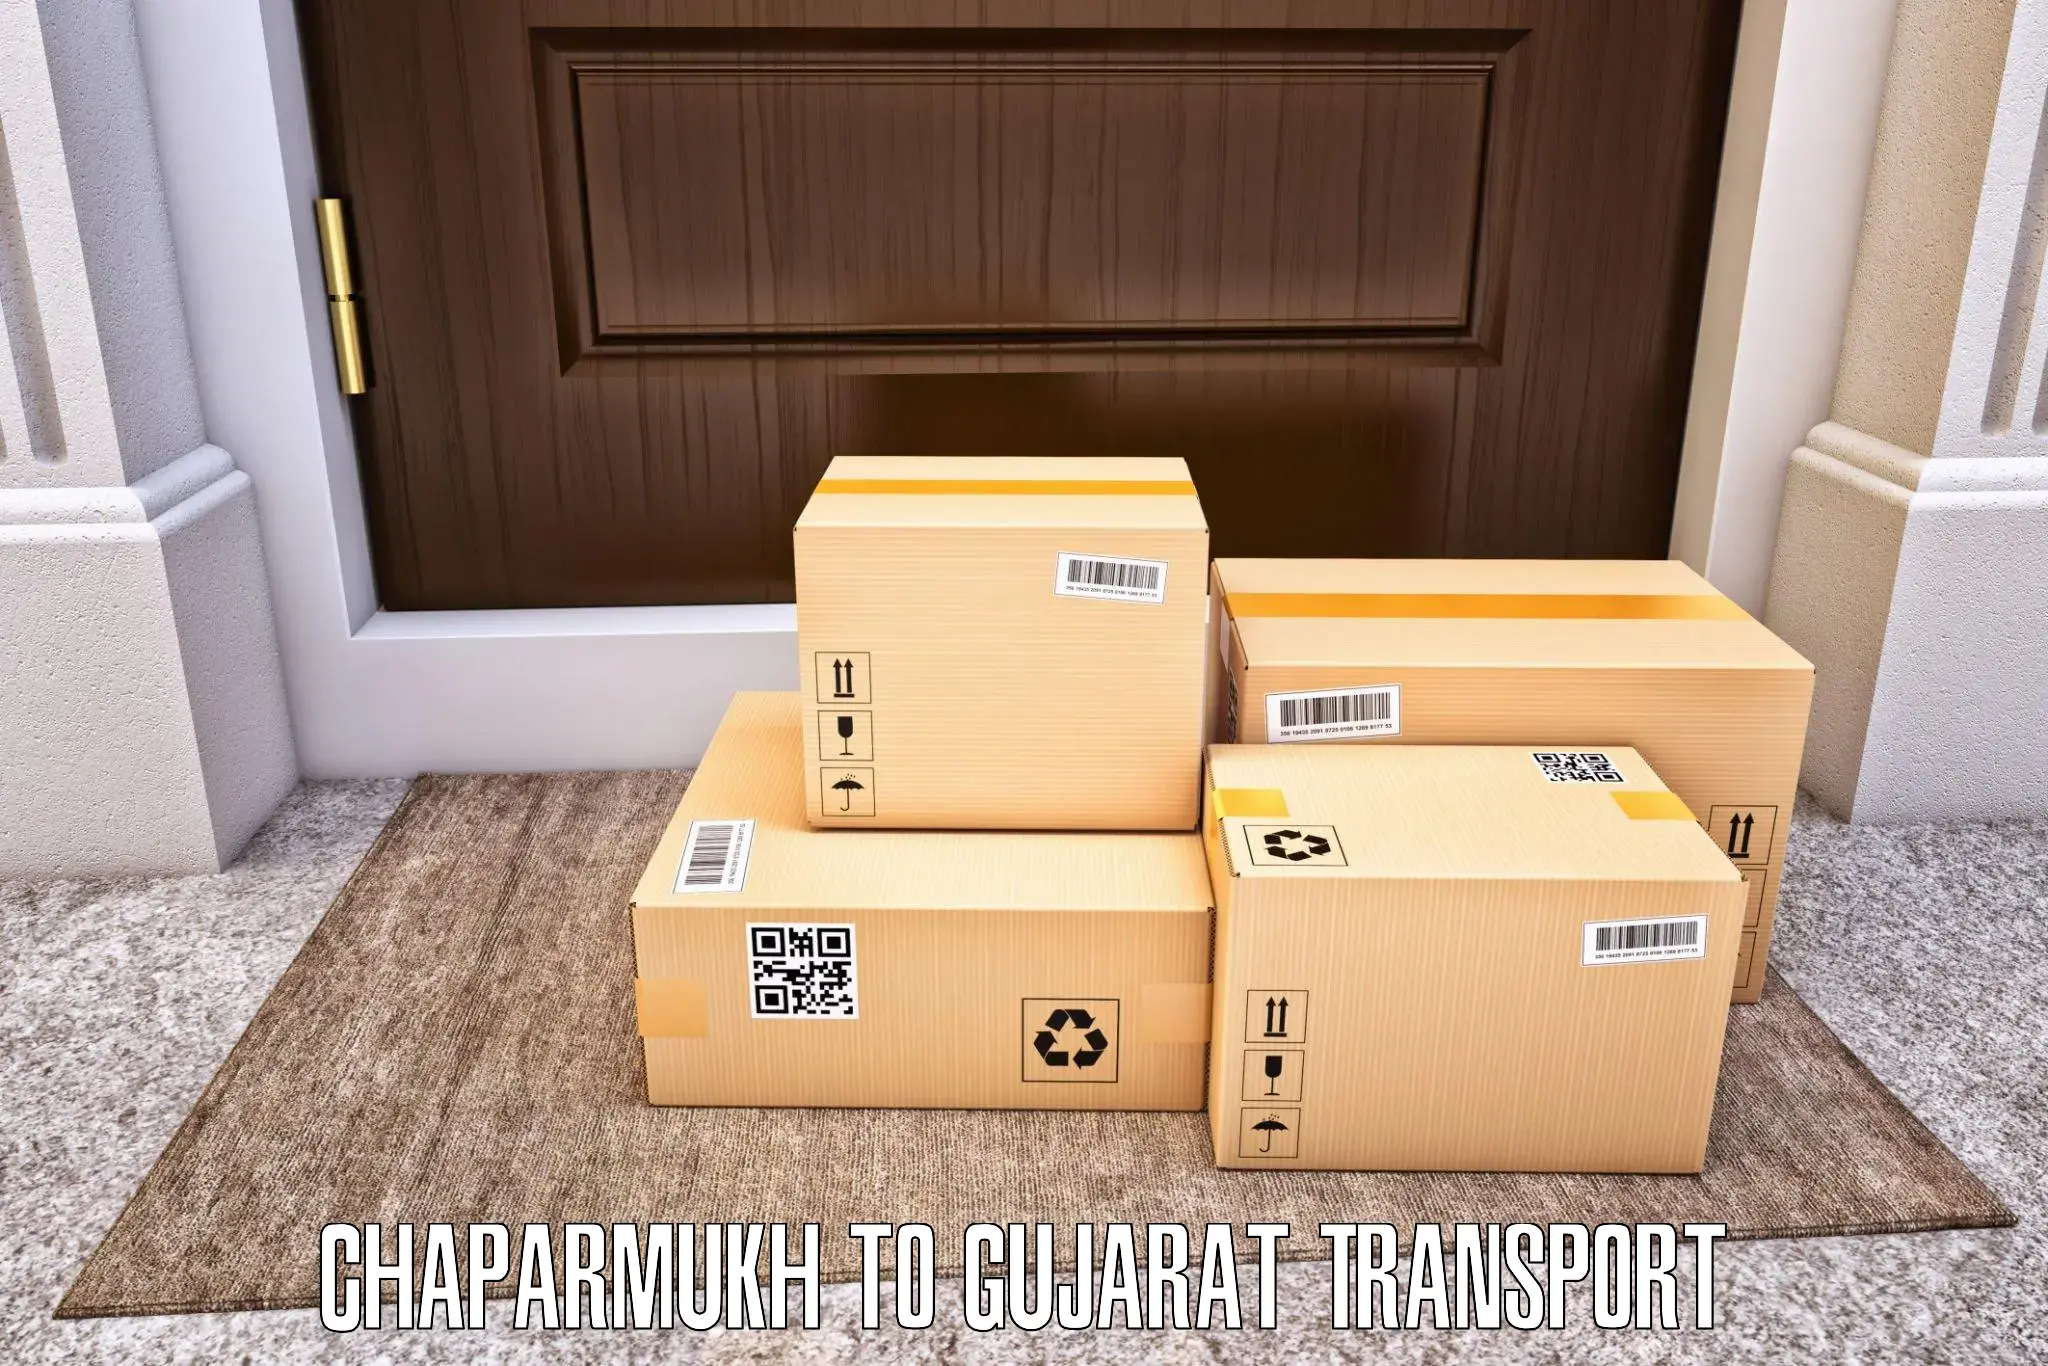 Online transport booking Chaparmukh to Prantij